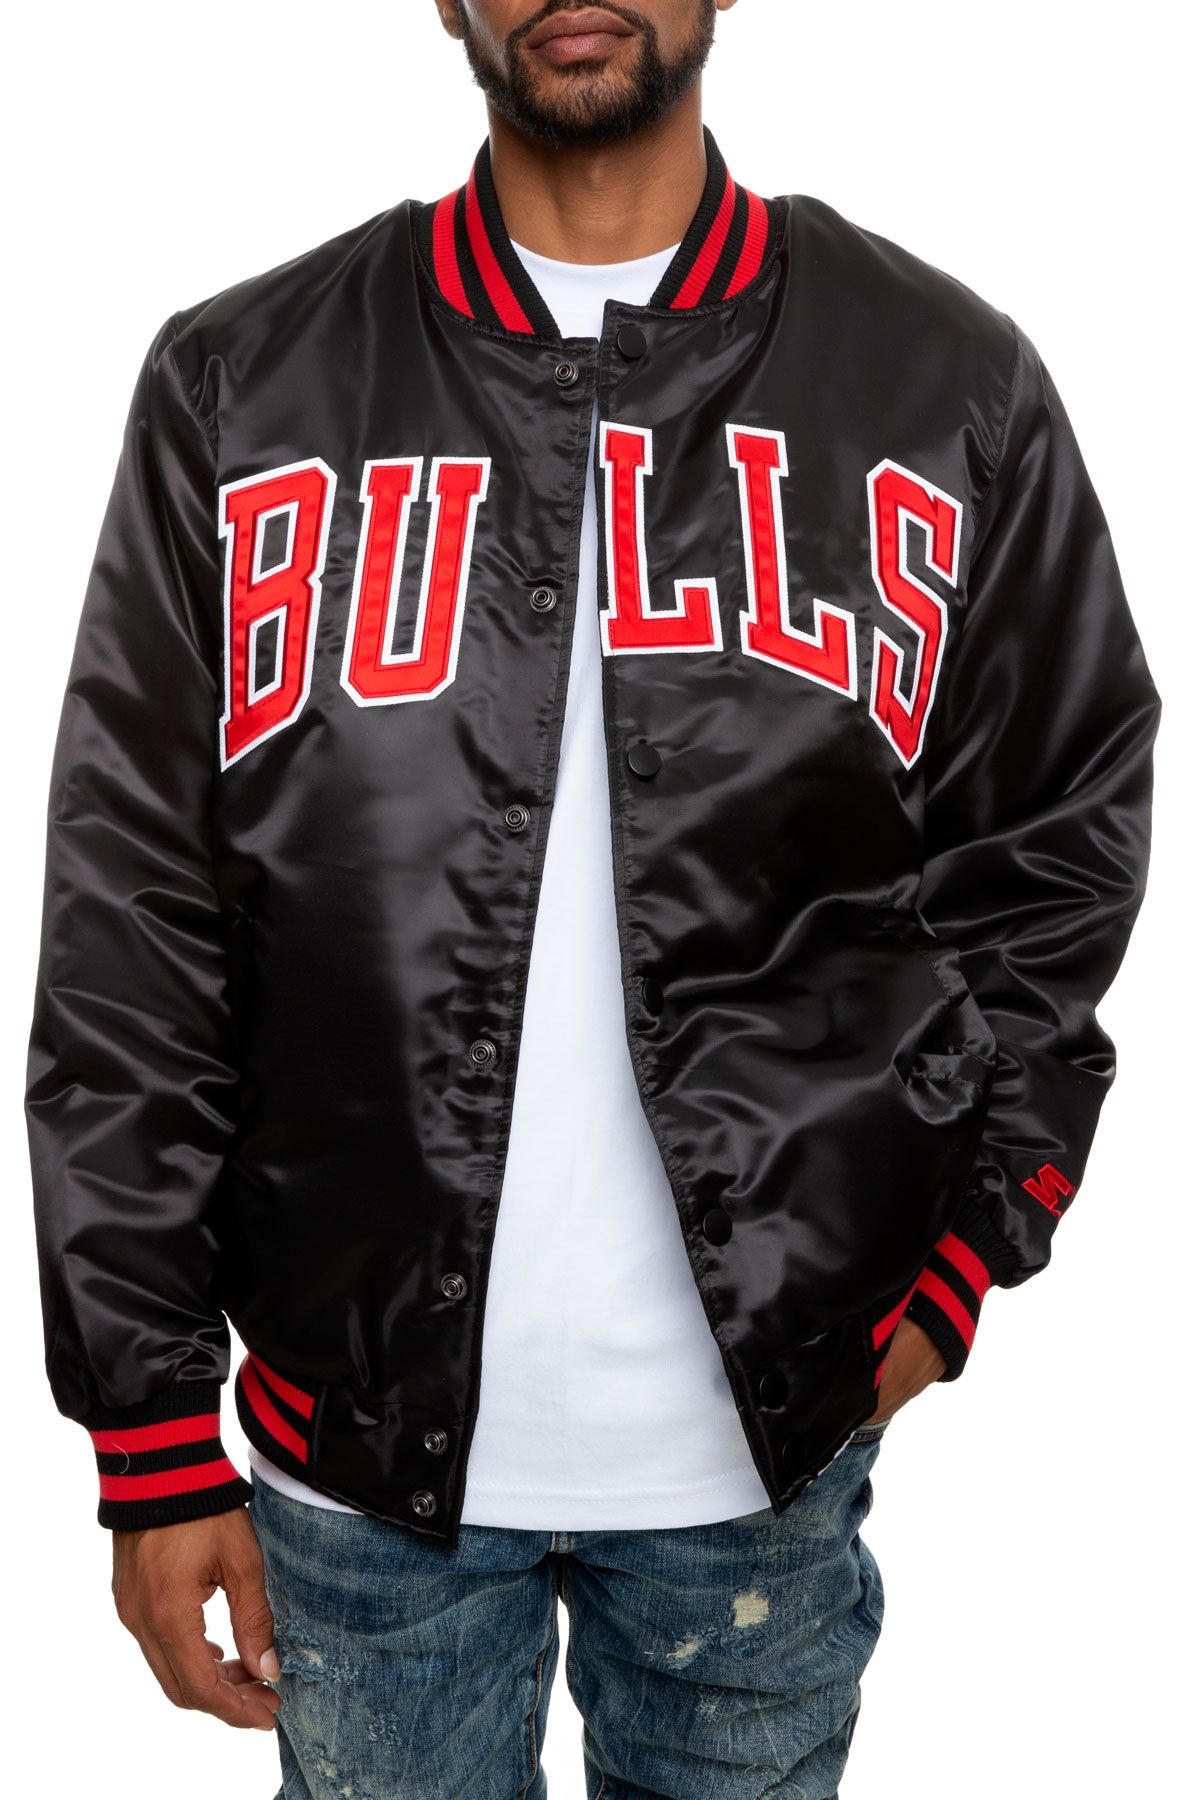 chicago bulls jacket red